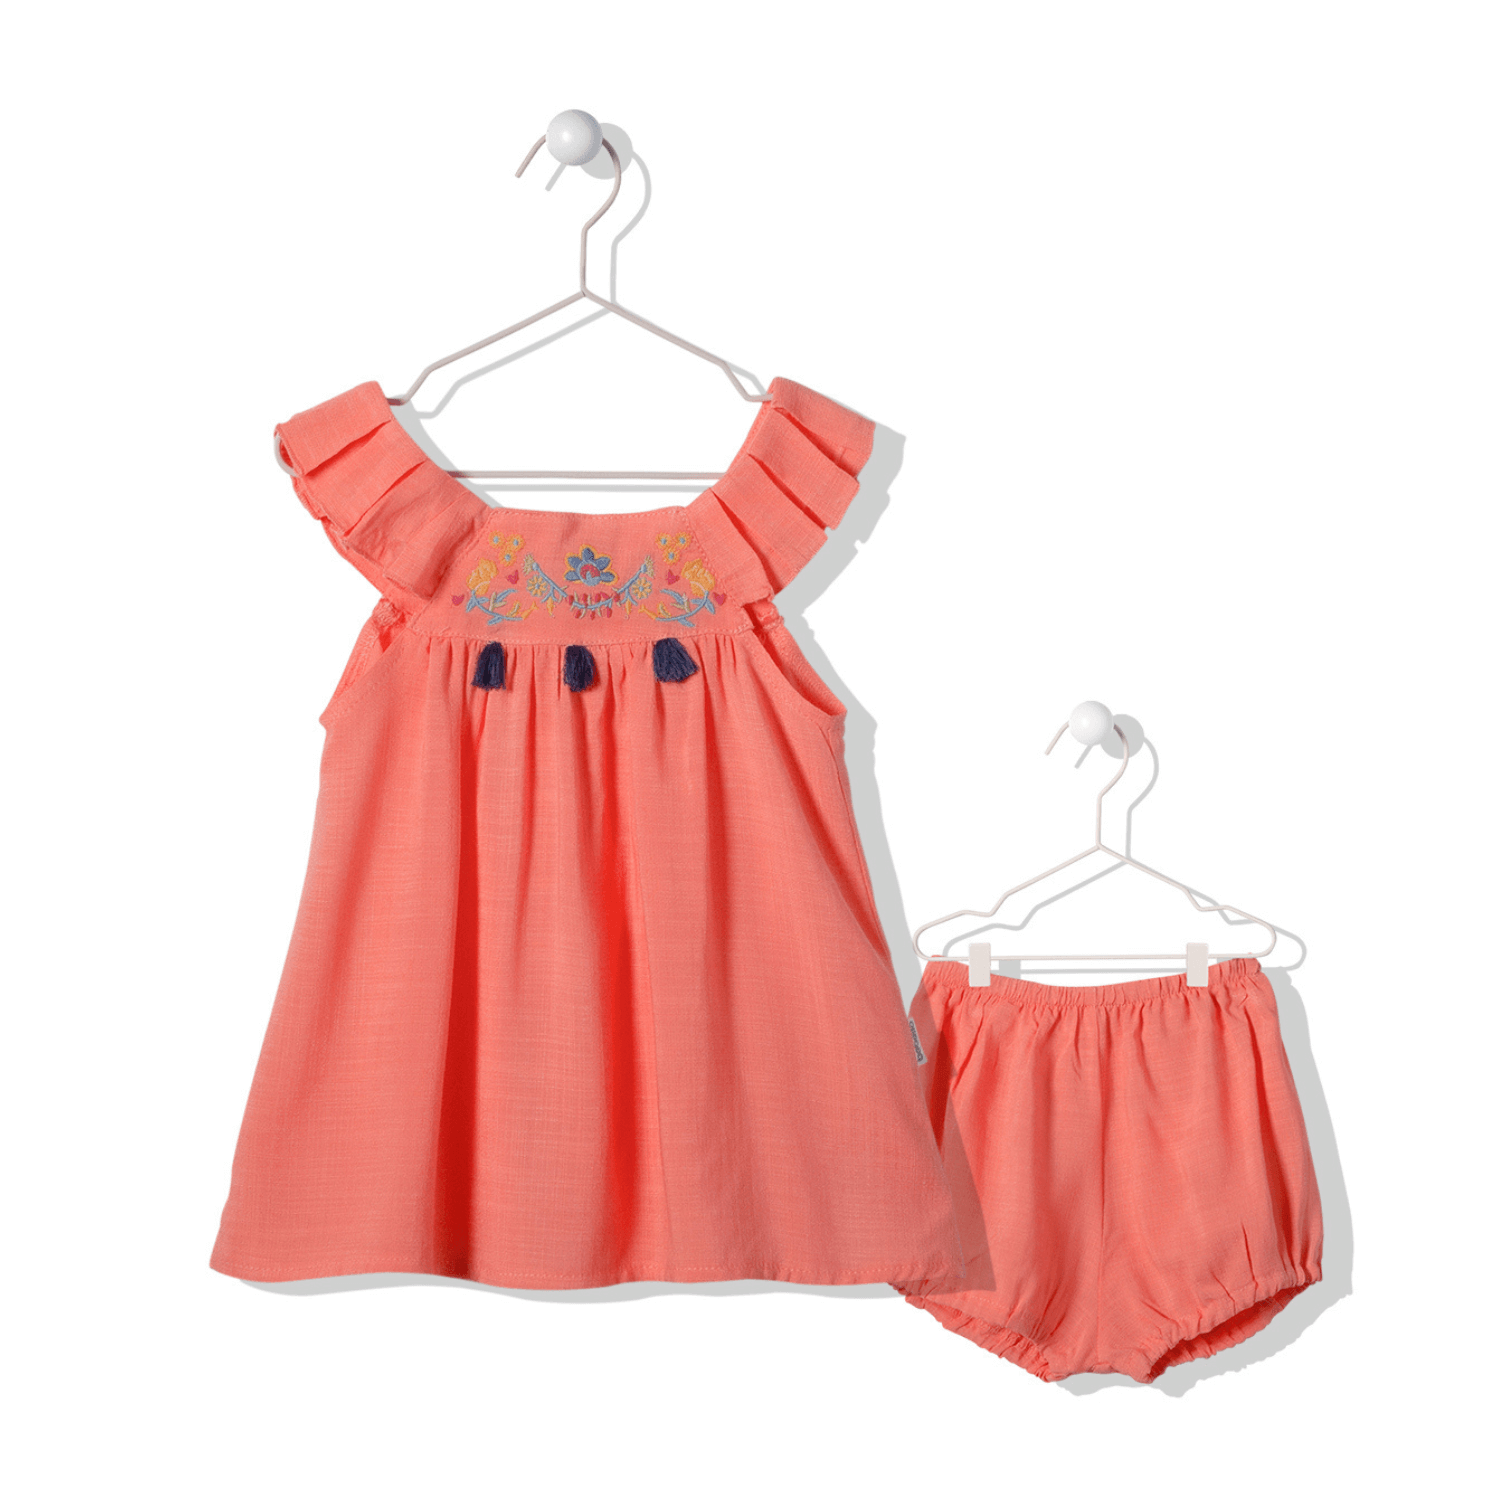 Baby Girls Dresses 6-9 months Pretty Summer Cotton Dress Lot of 4 | eBay